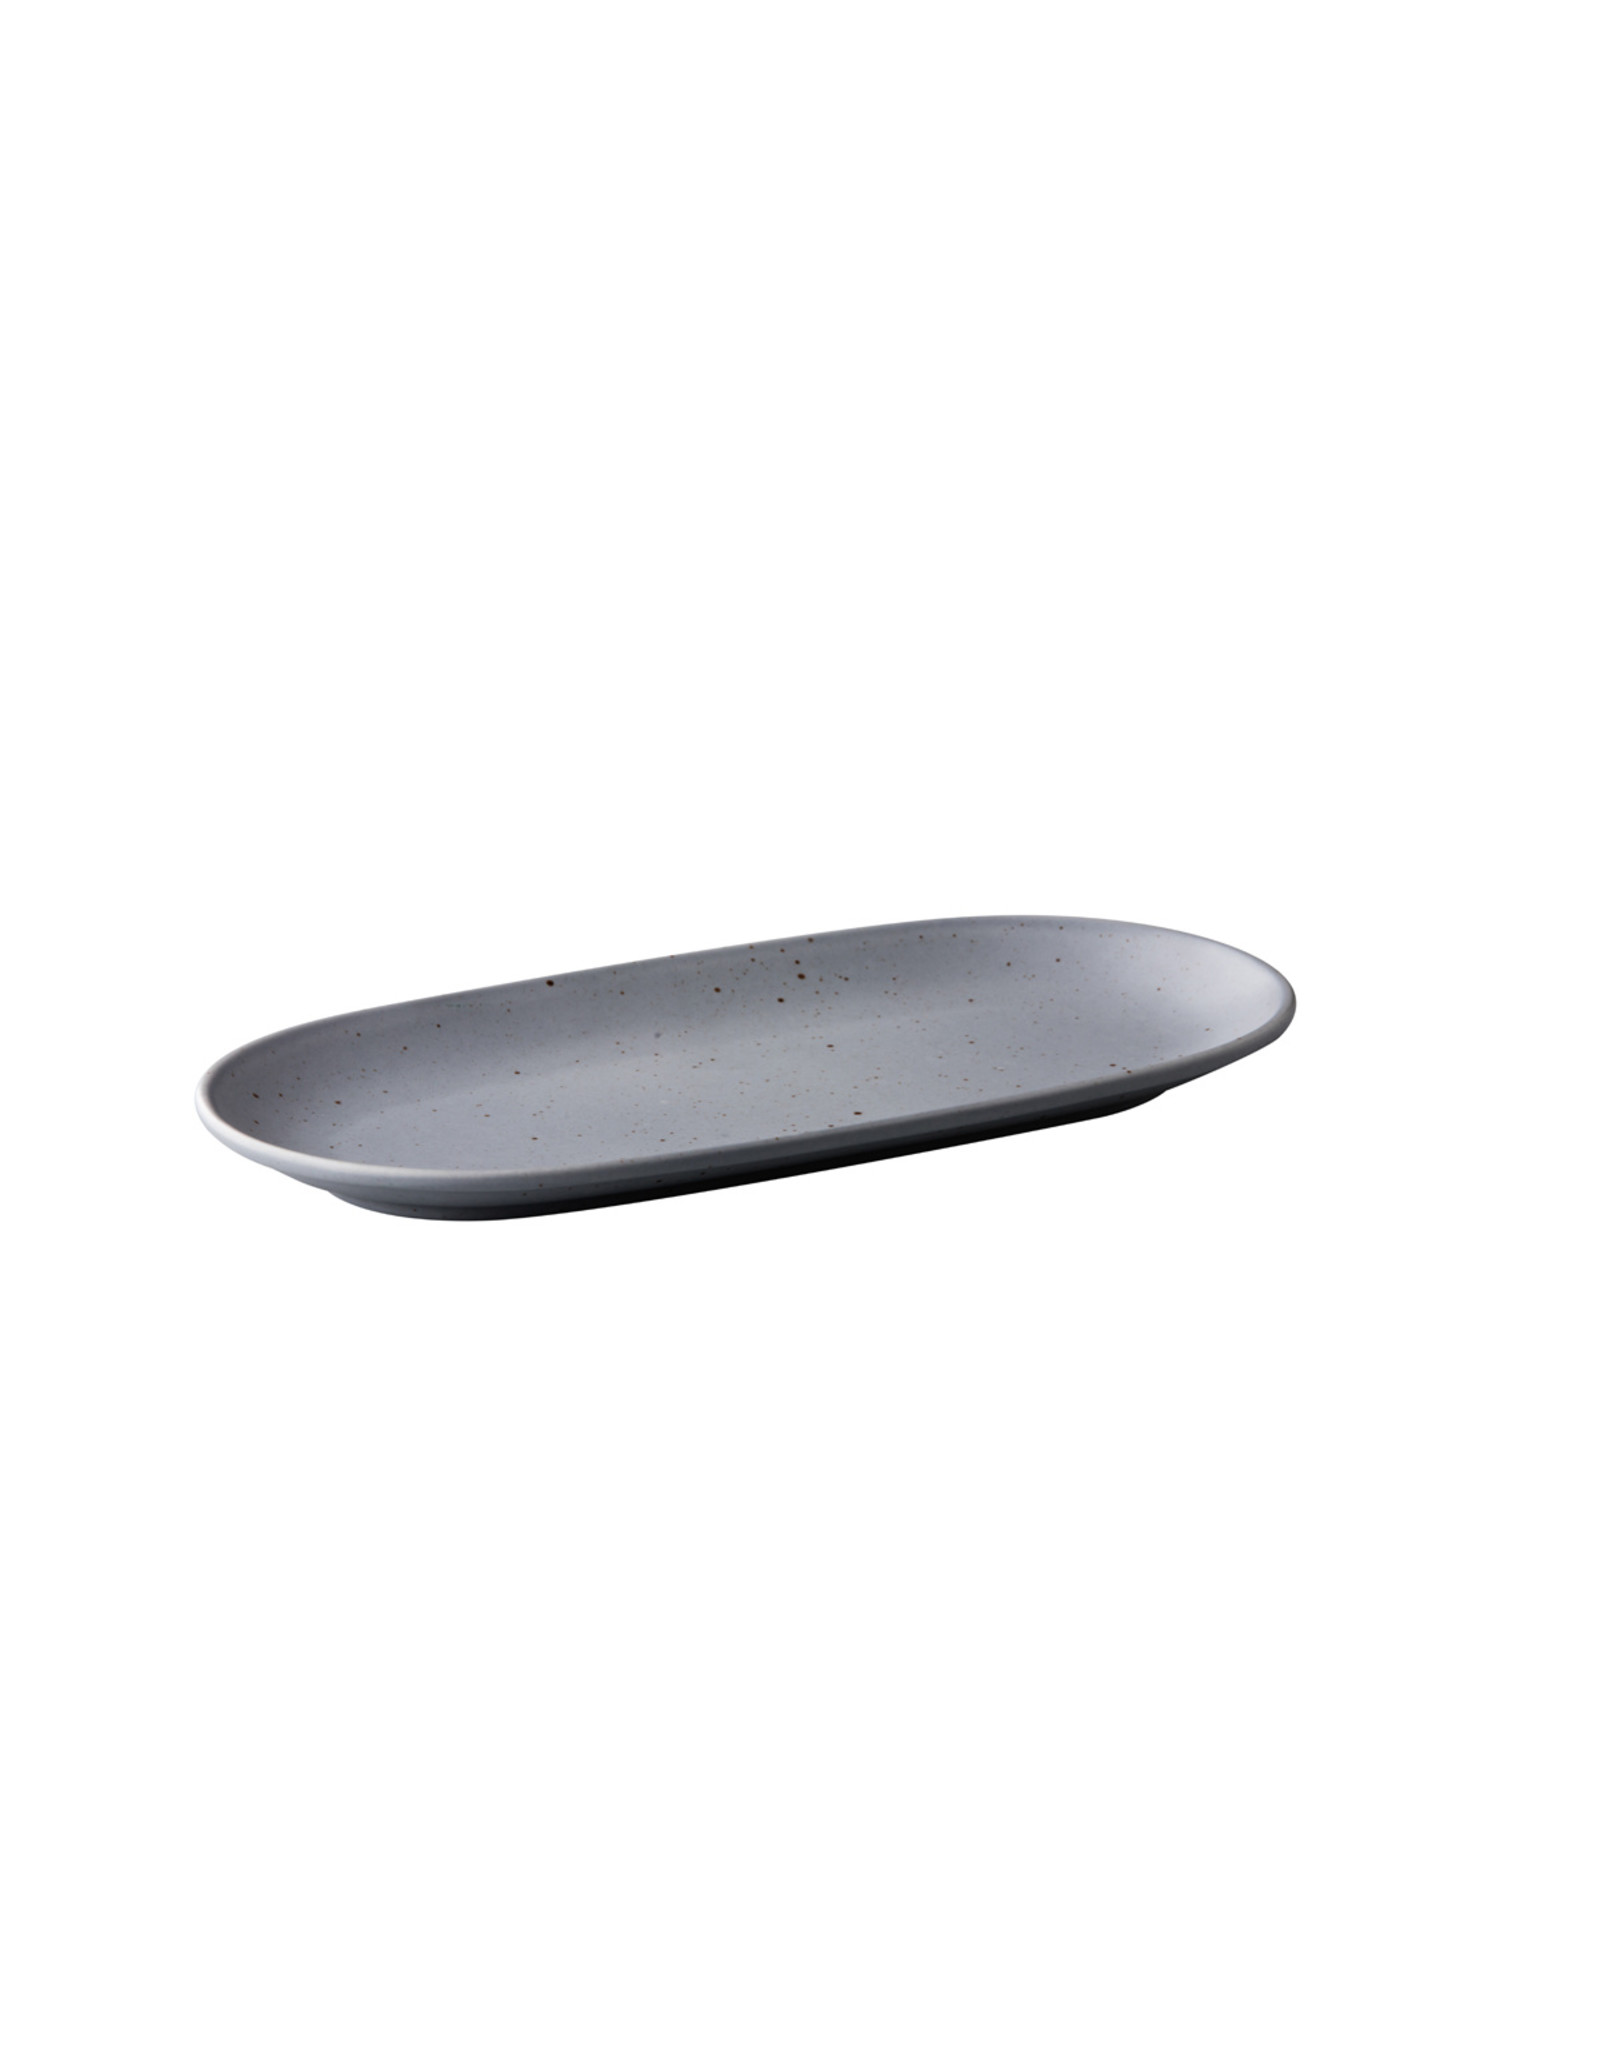 Stylepoint Tinto ovalen serveerbord mat grijs 30 x 15 cm